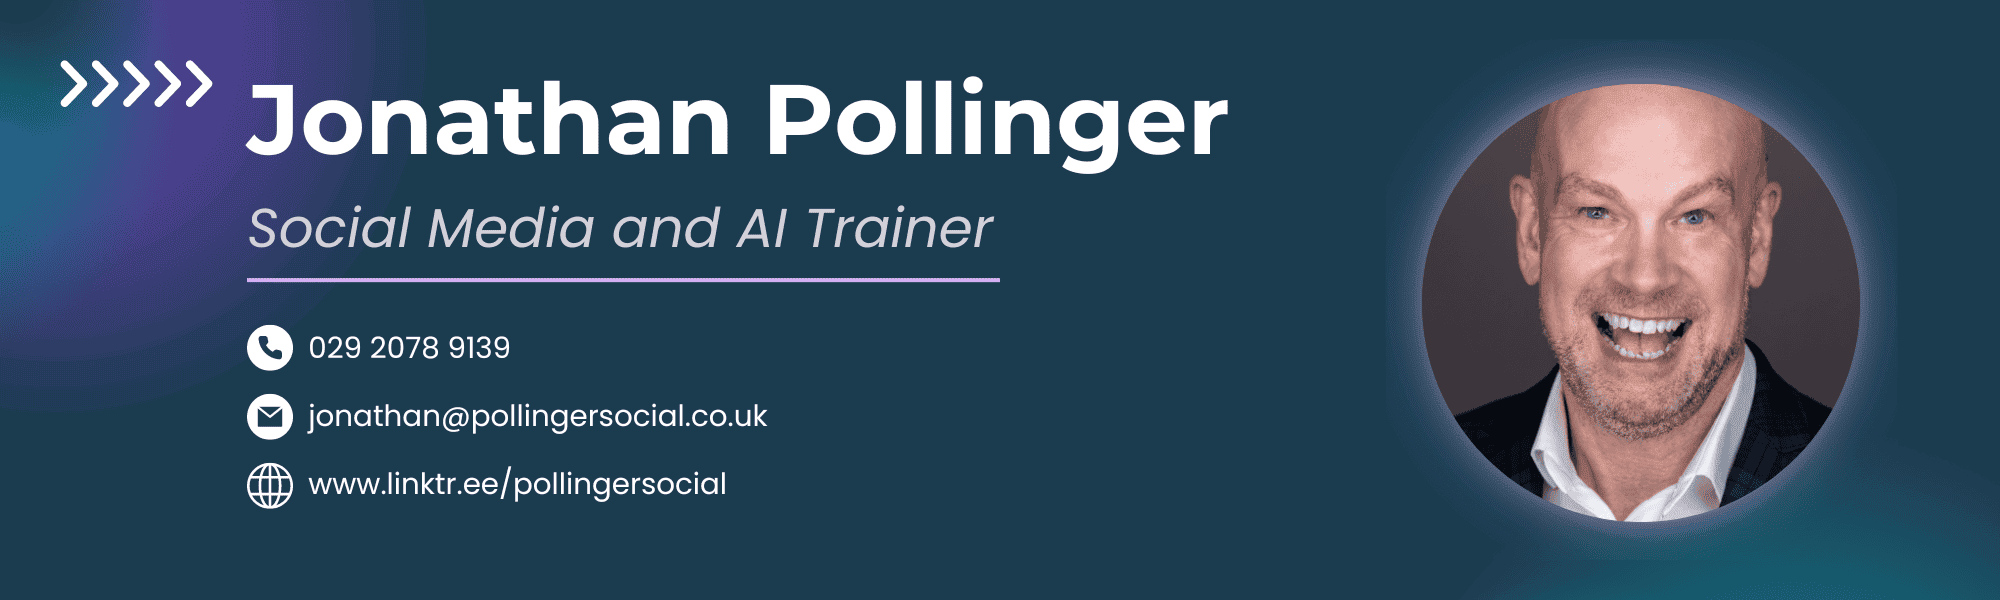 Jonathan Pollinger - Social Media and AI Trainer